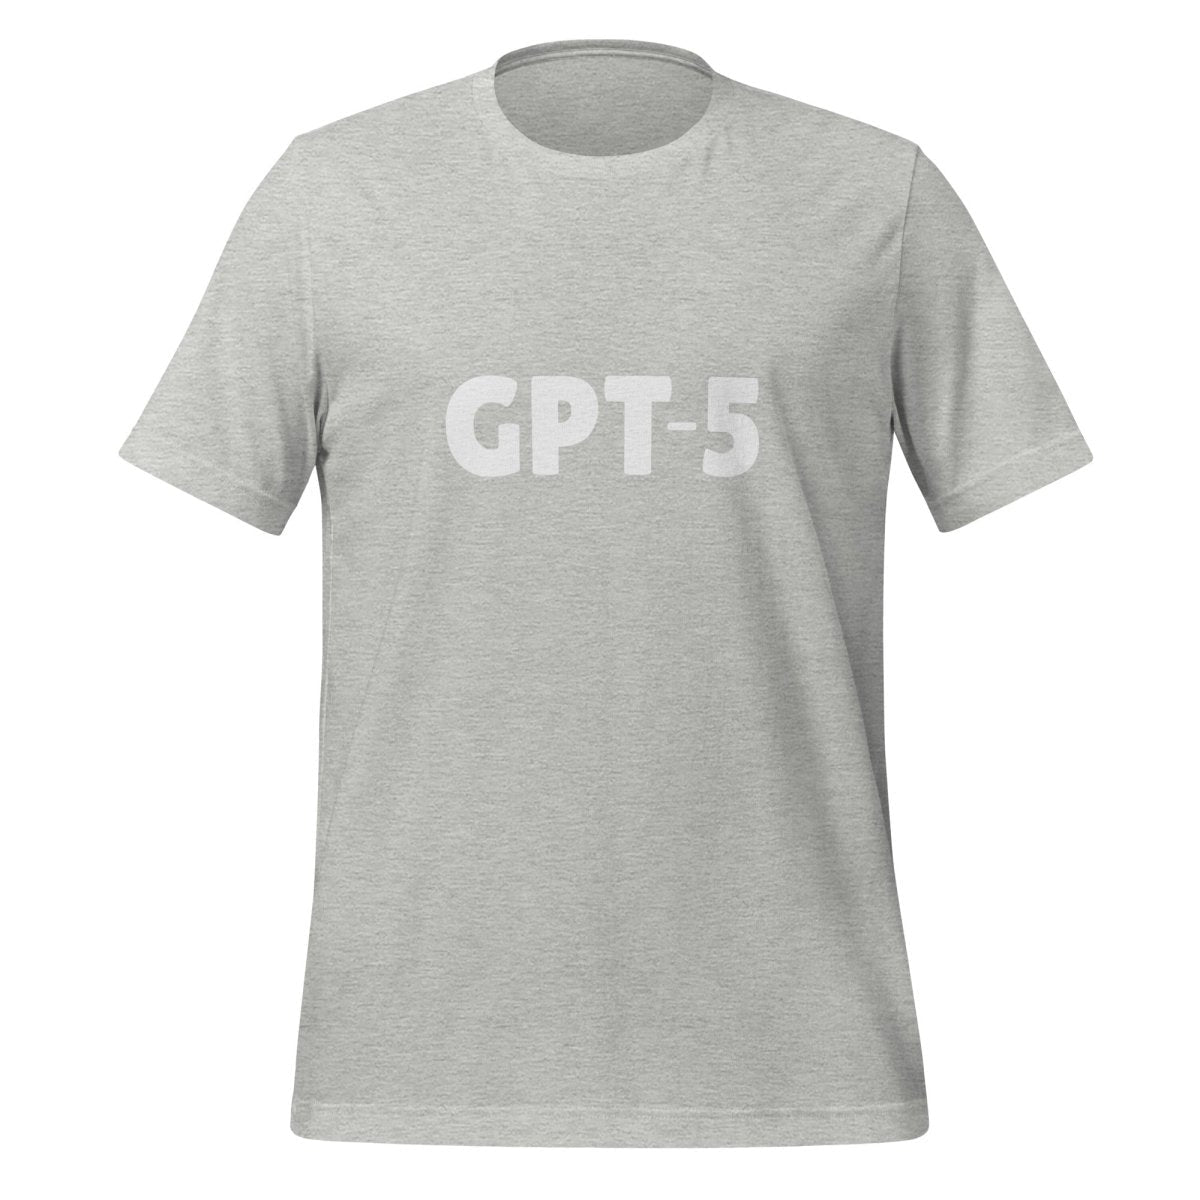 GPT - 5 T - Shirt 2 (unisex) - Athletic Heather - AI Store